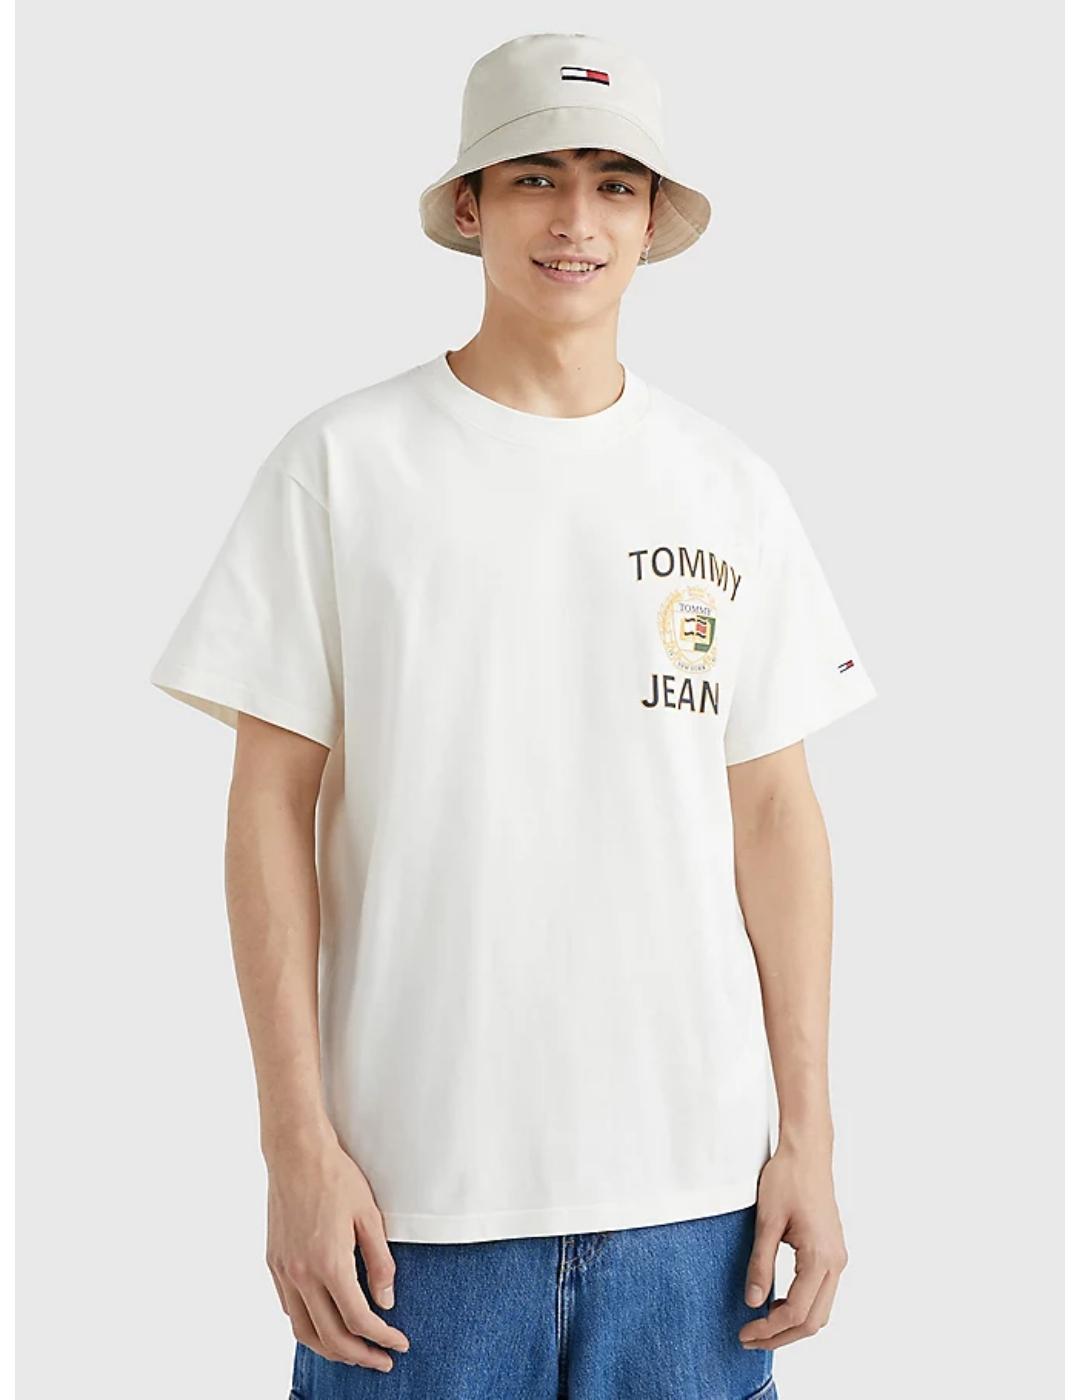 Camiseta Tomy Jeans luxe blanca para hombre